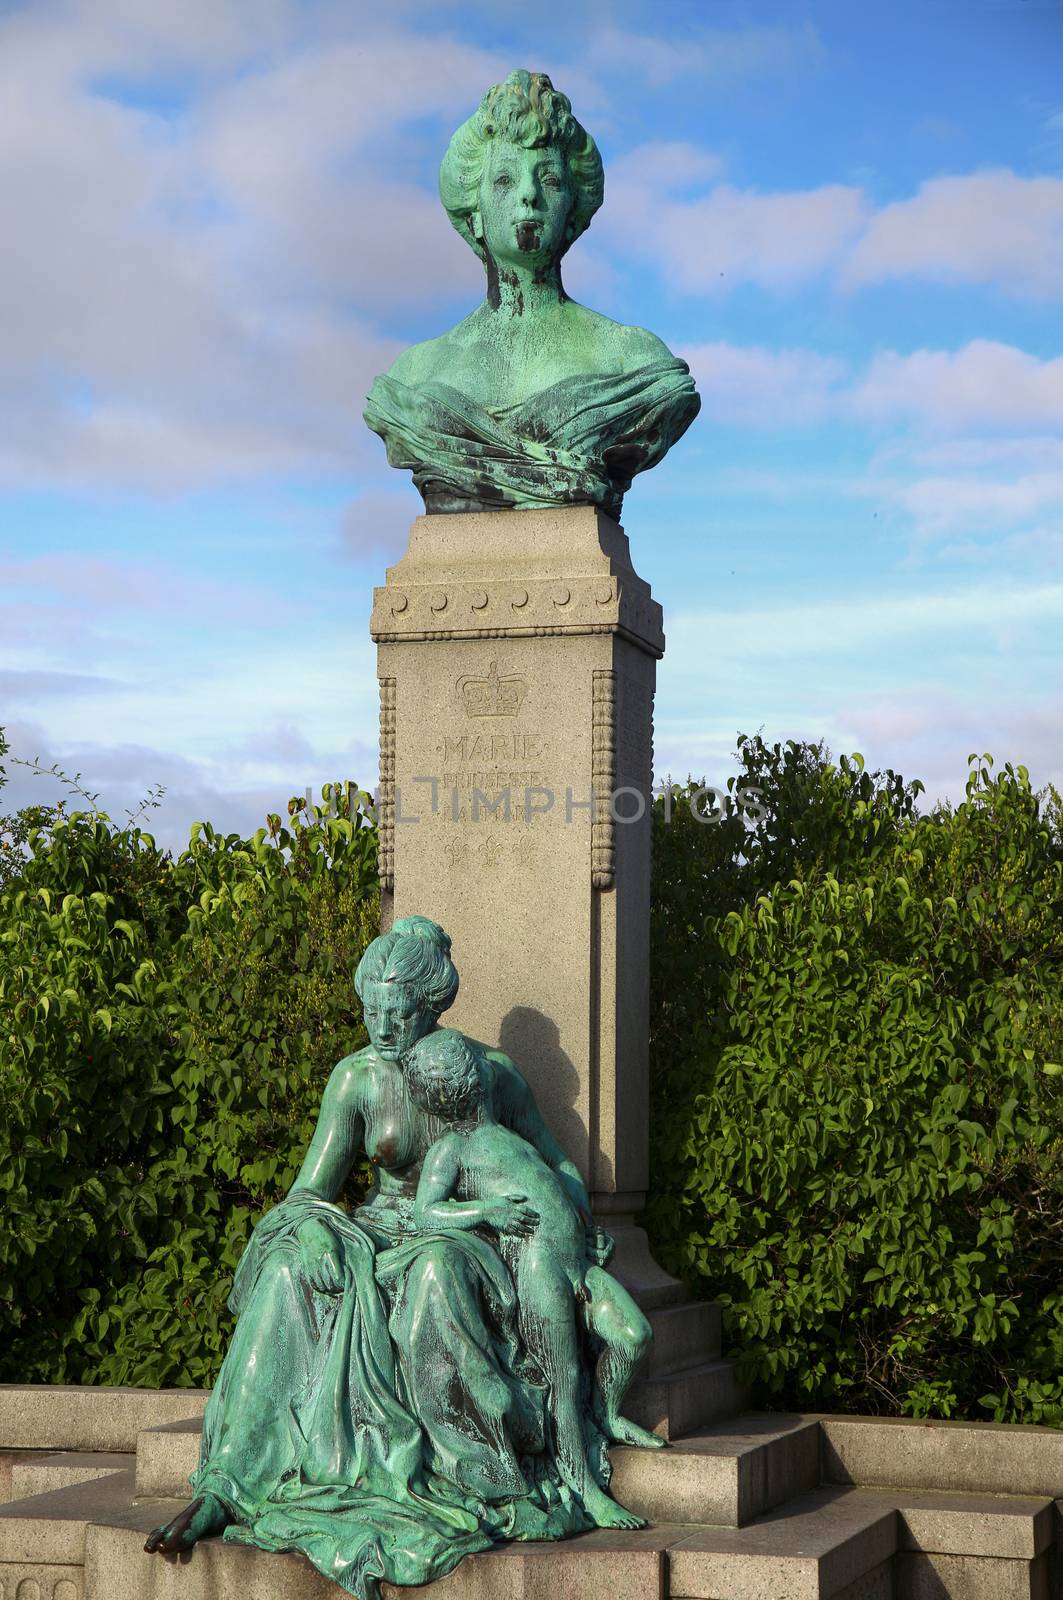 The monument Princess Marie of Orléans at Langelinie in Copenhagen, Denmark